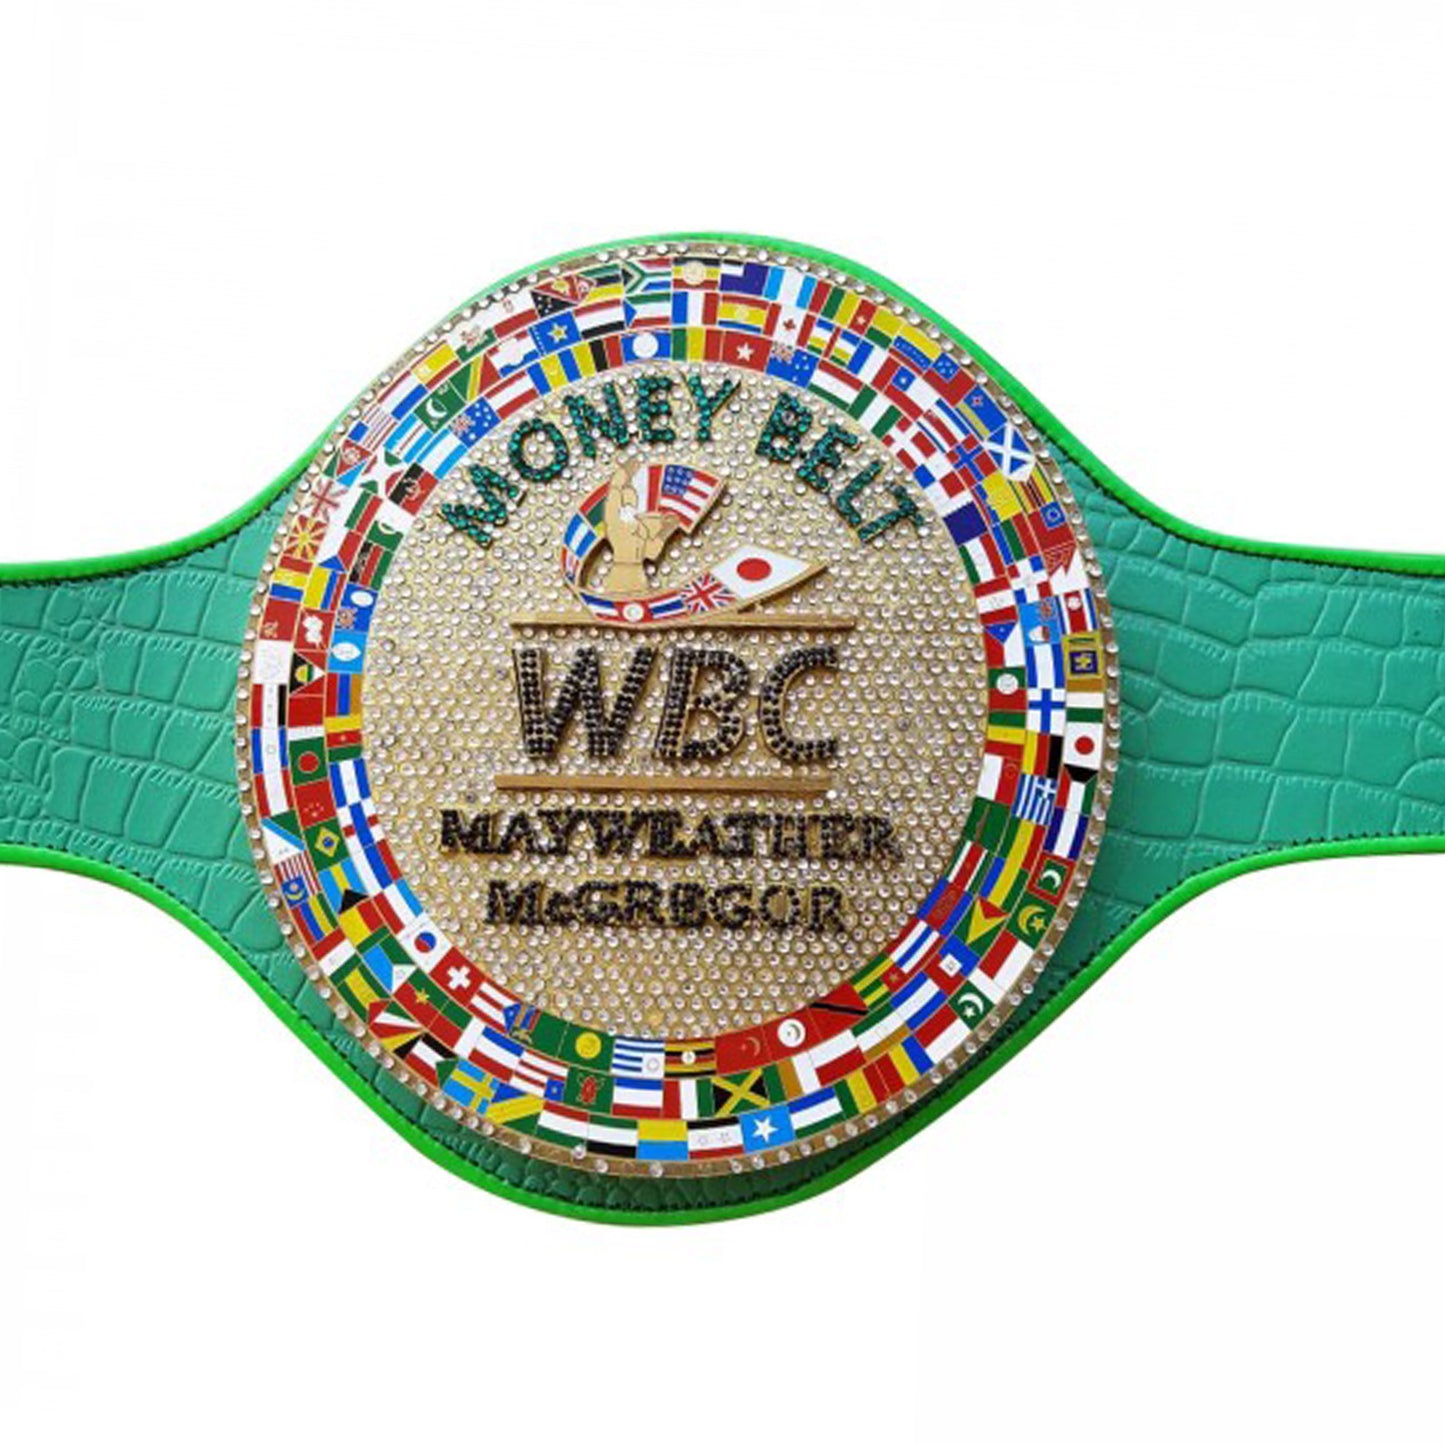 WBC MONEY BELT FIGHT MAYWEATHER MCGREGOR BOXING CHAMPIONSHIP BELT